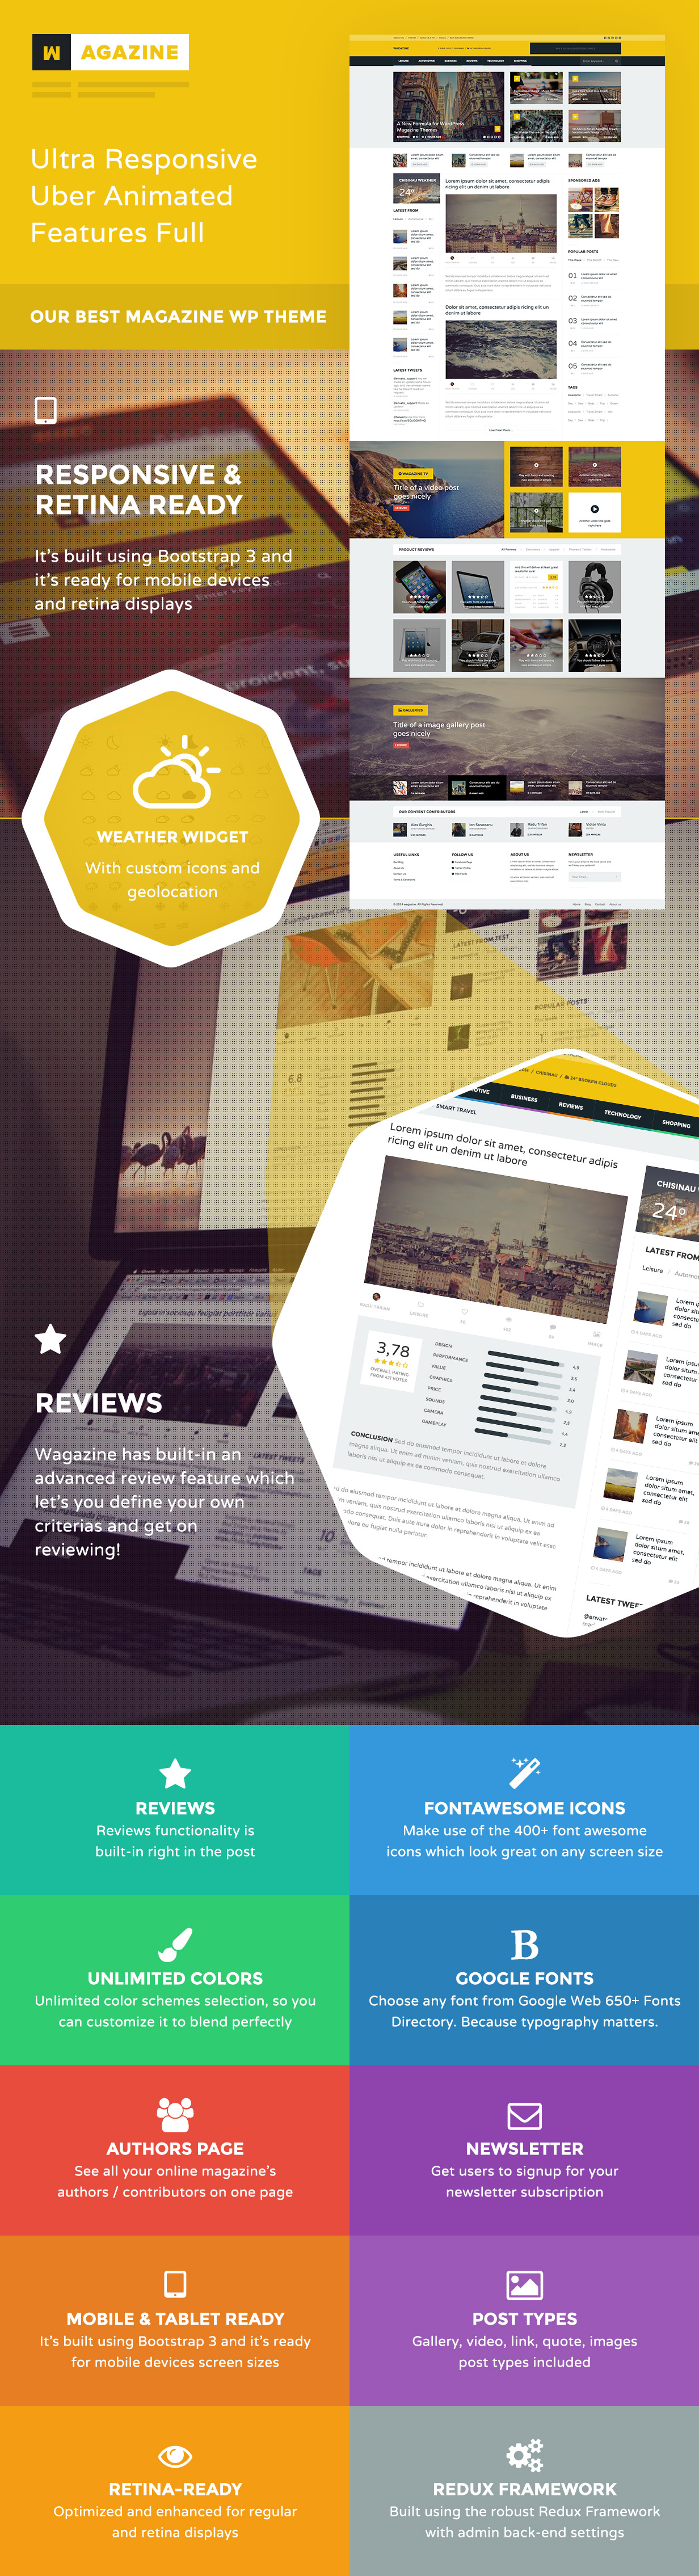 Wagazine - Magazine & Reviews Responsive WordPress Theme - 1